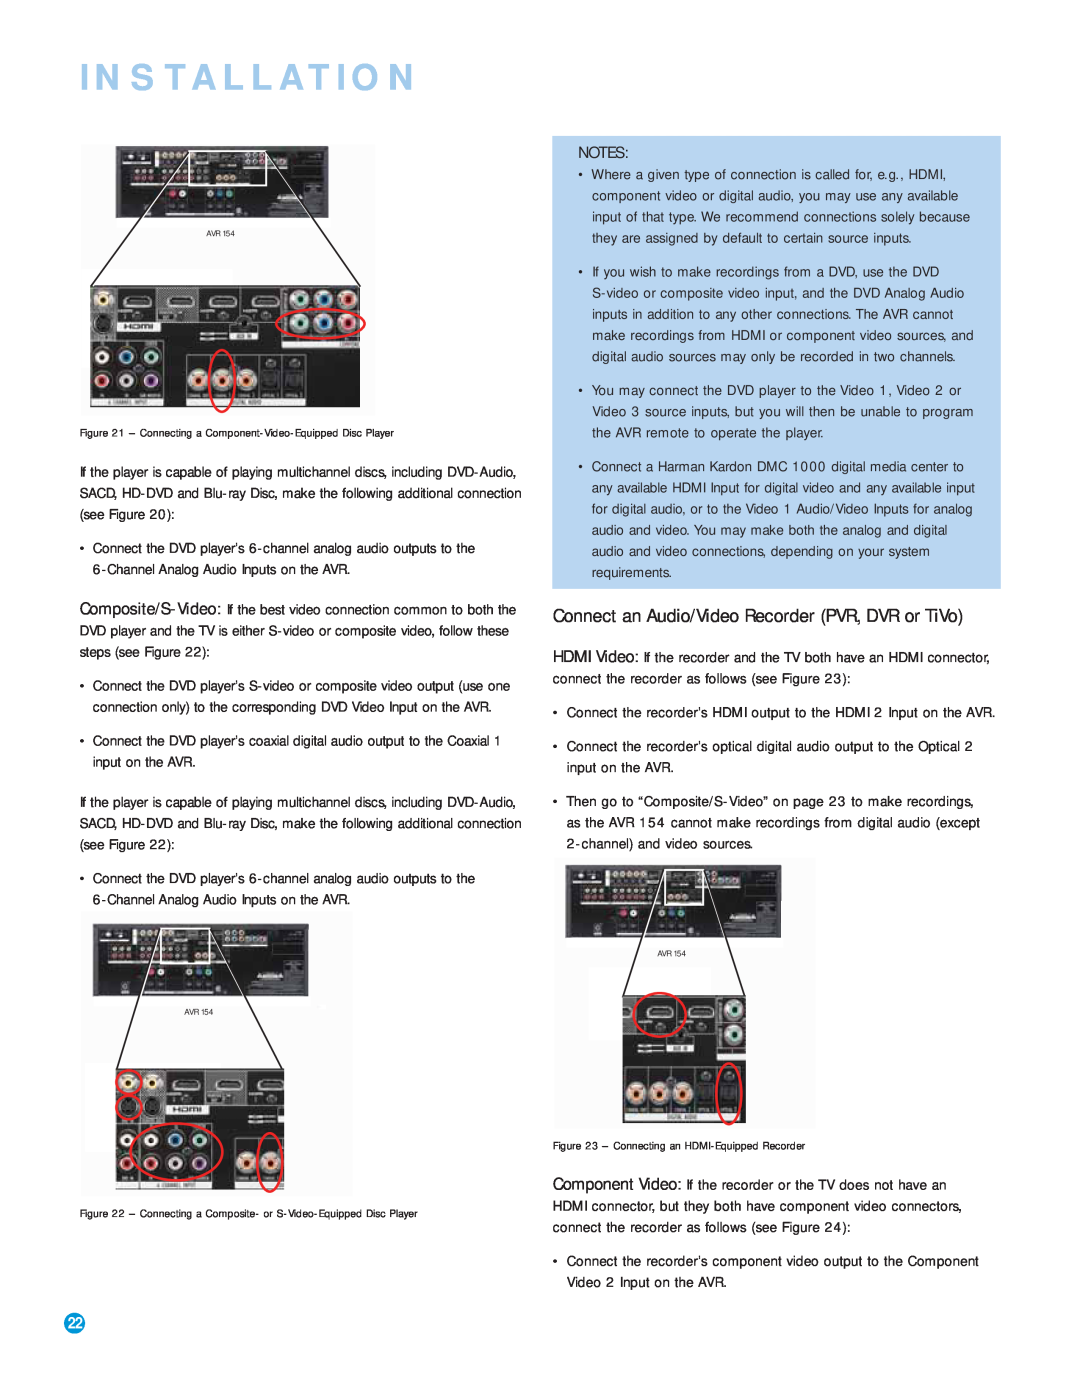 Harman-Kardon AVR 154 owner manual Connect an Audio/Video Recorder PVR, DVR or TiVo, Installation 